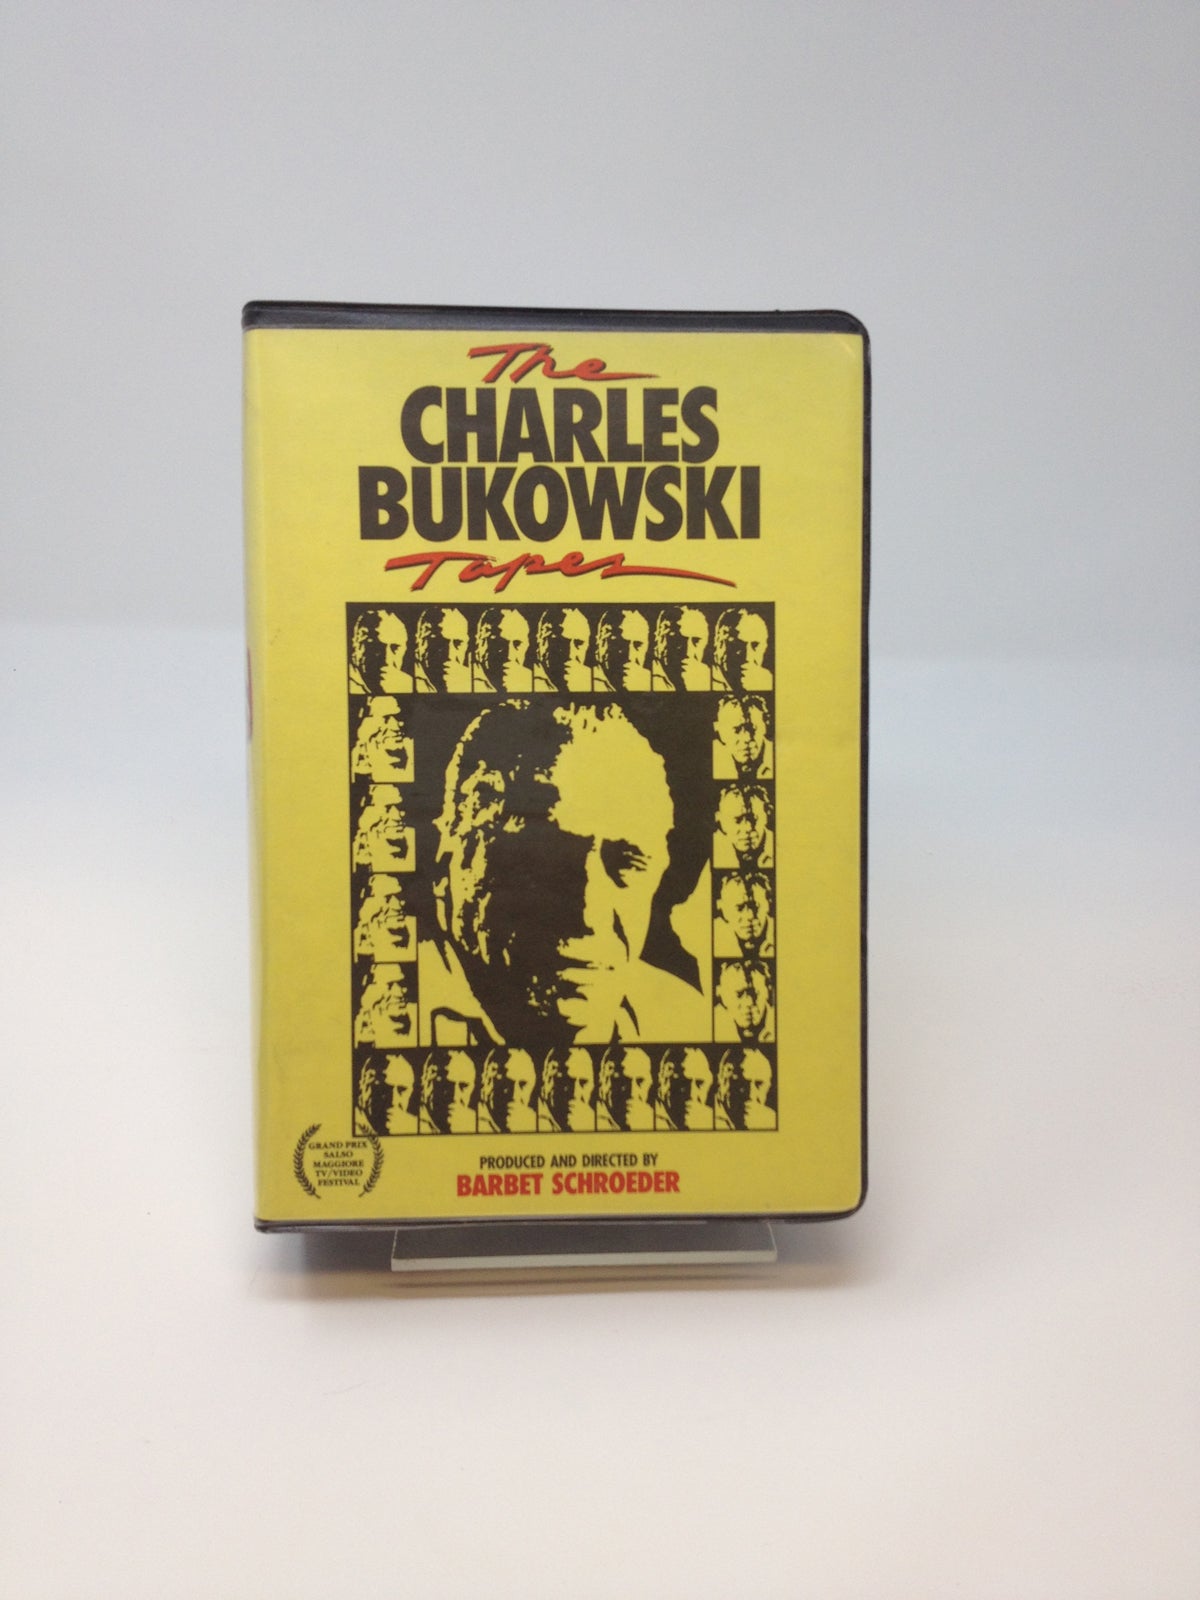 Bukowski, Charles - The Charles Bukowski Tapes